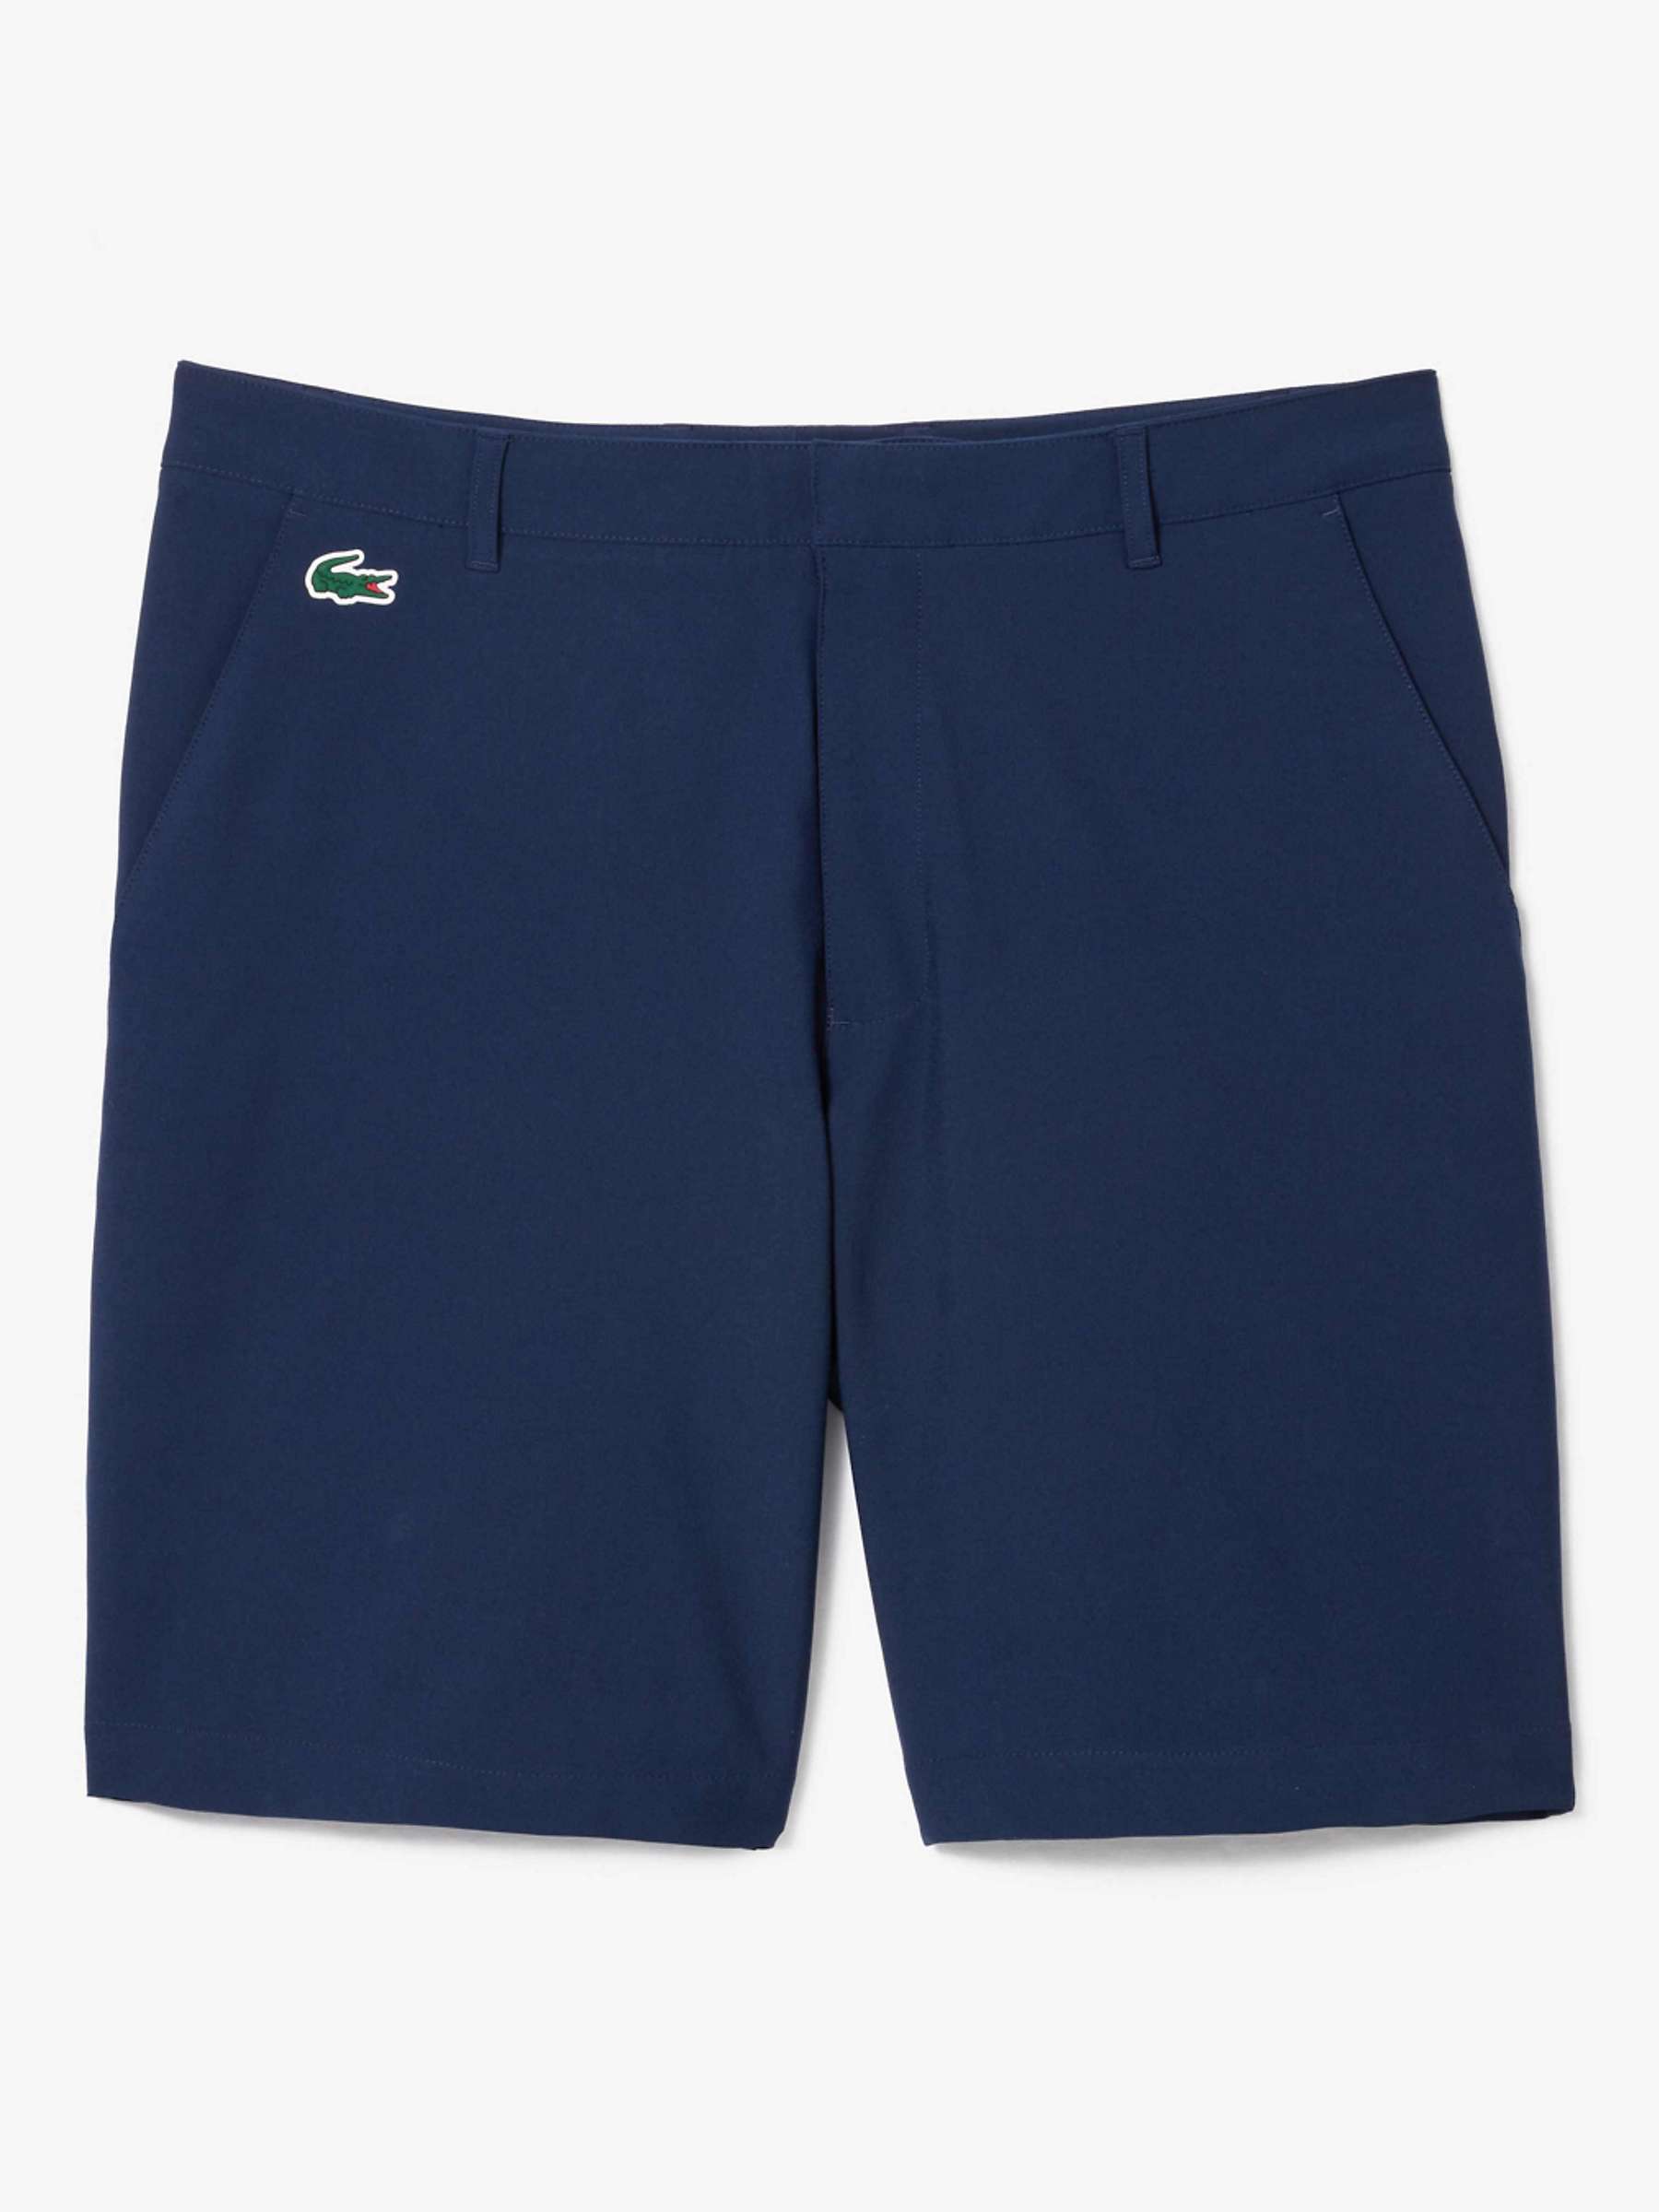 Buy Lacoste Golf Essentials Bermuda Shorts, Navy Blue Online at johnlewis.com